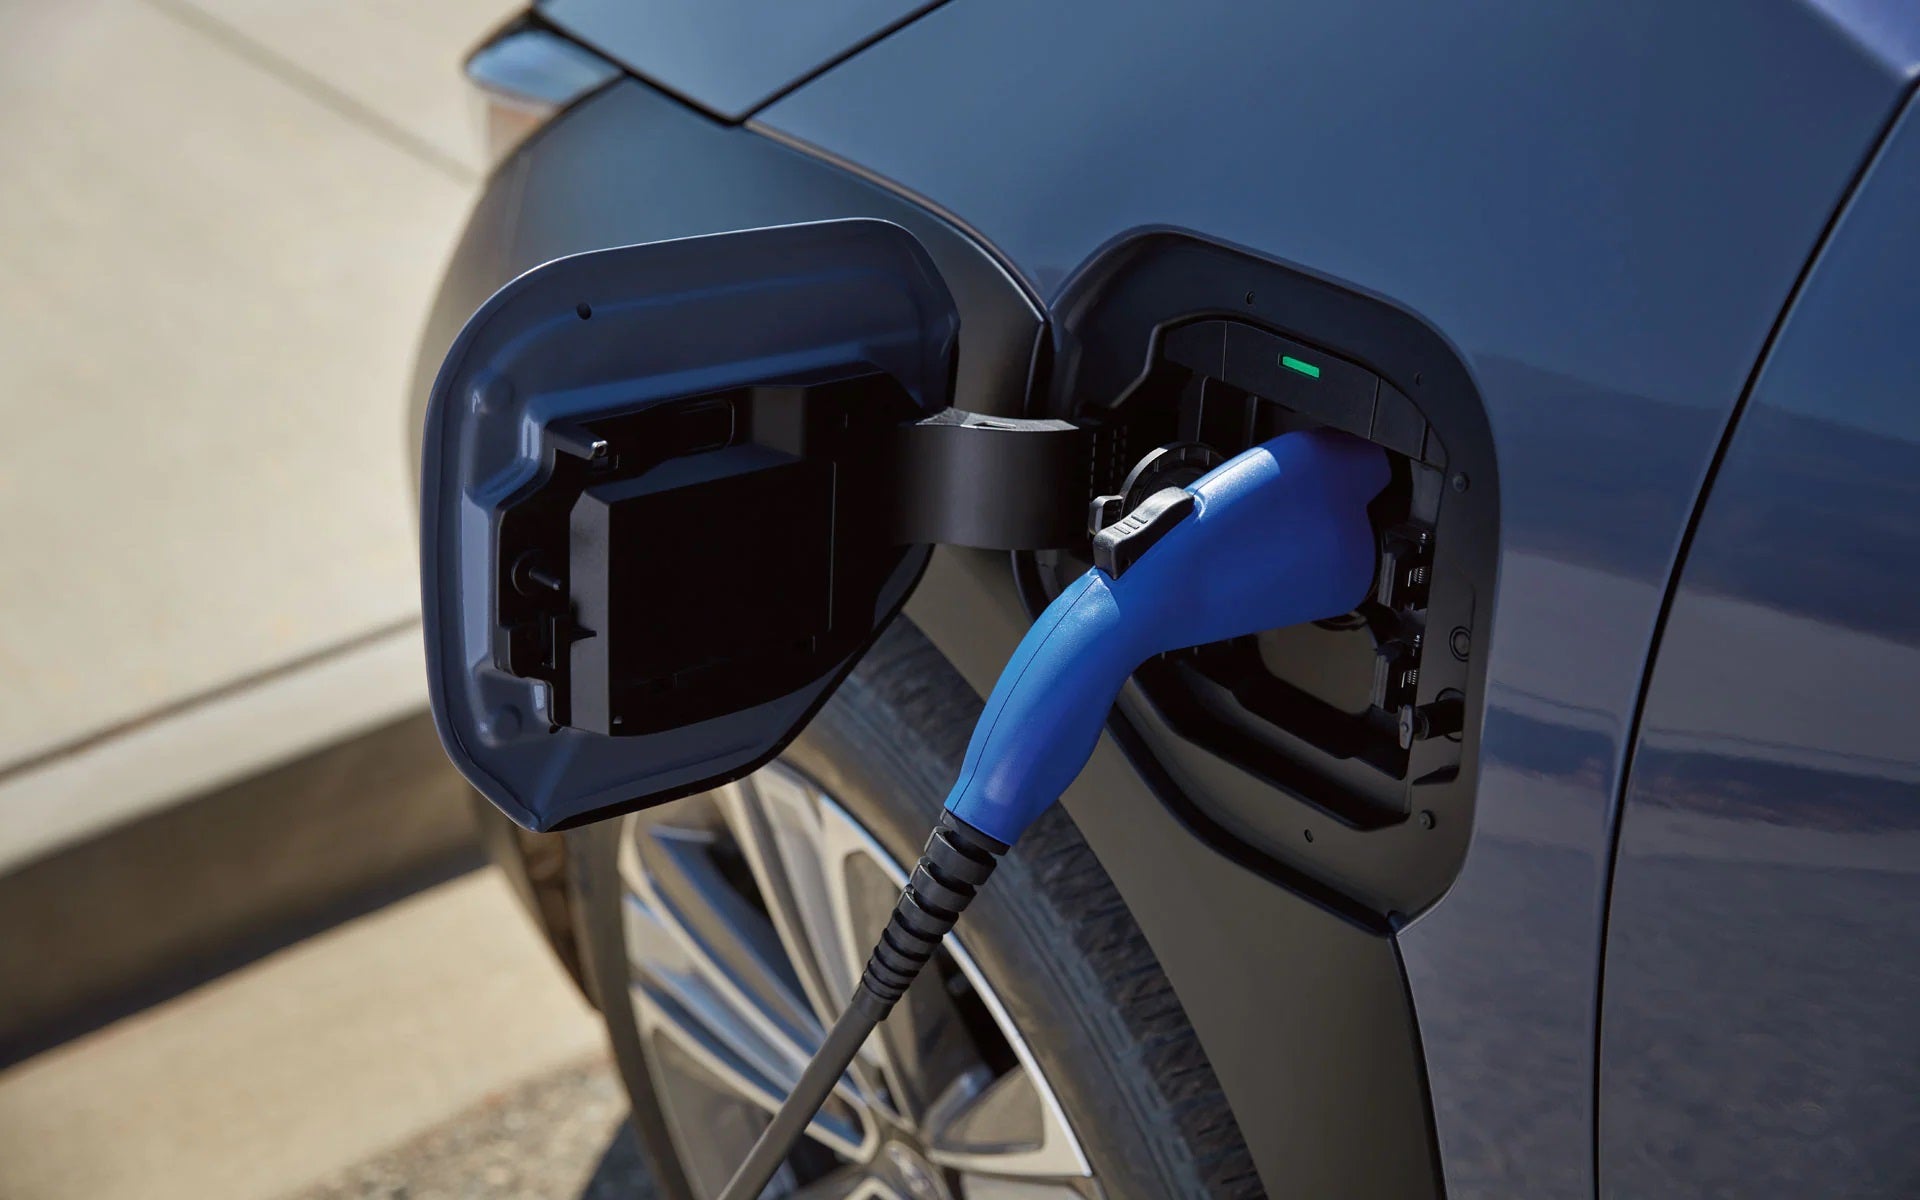 Guide to electric vehicles | Dalton Subaru in National City CA